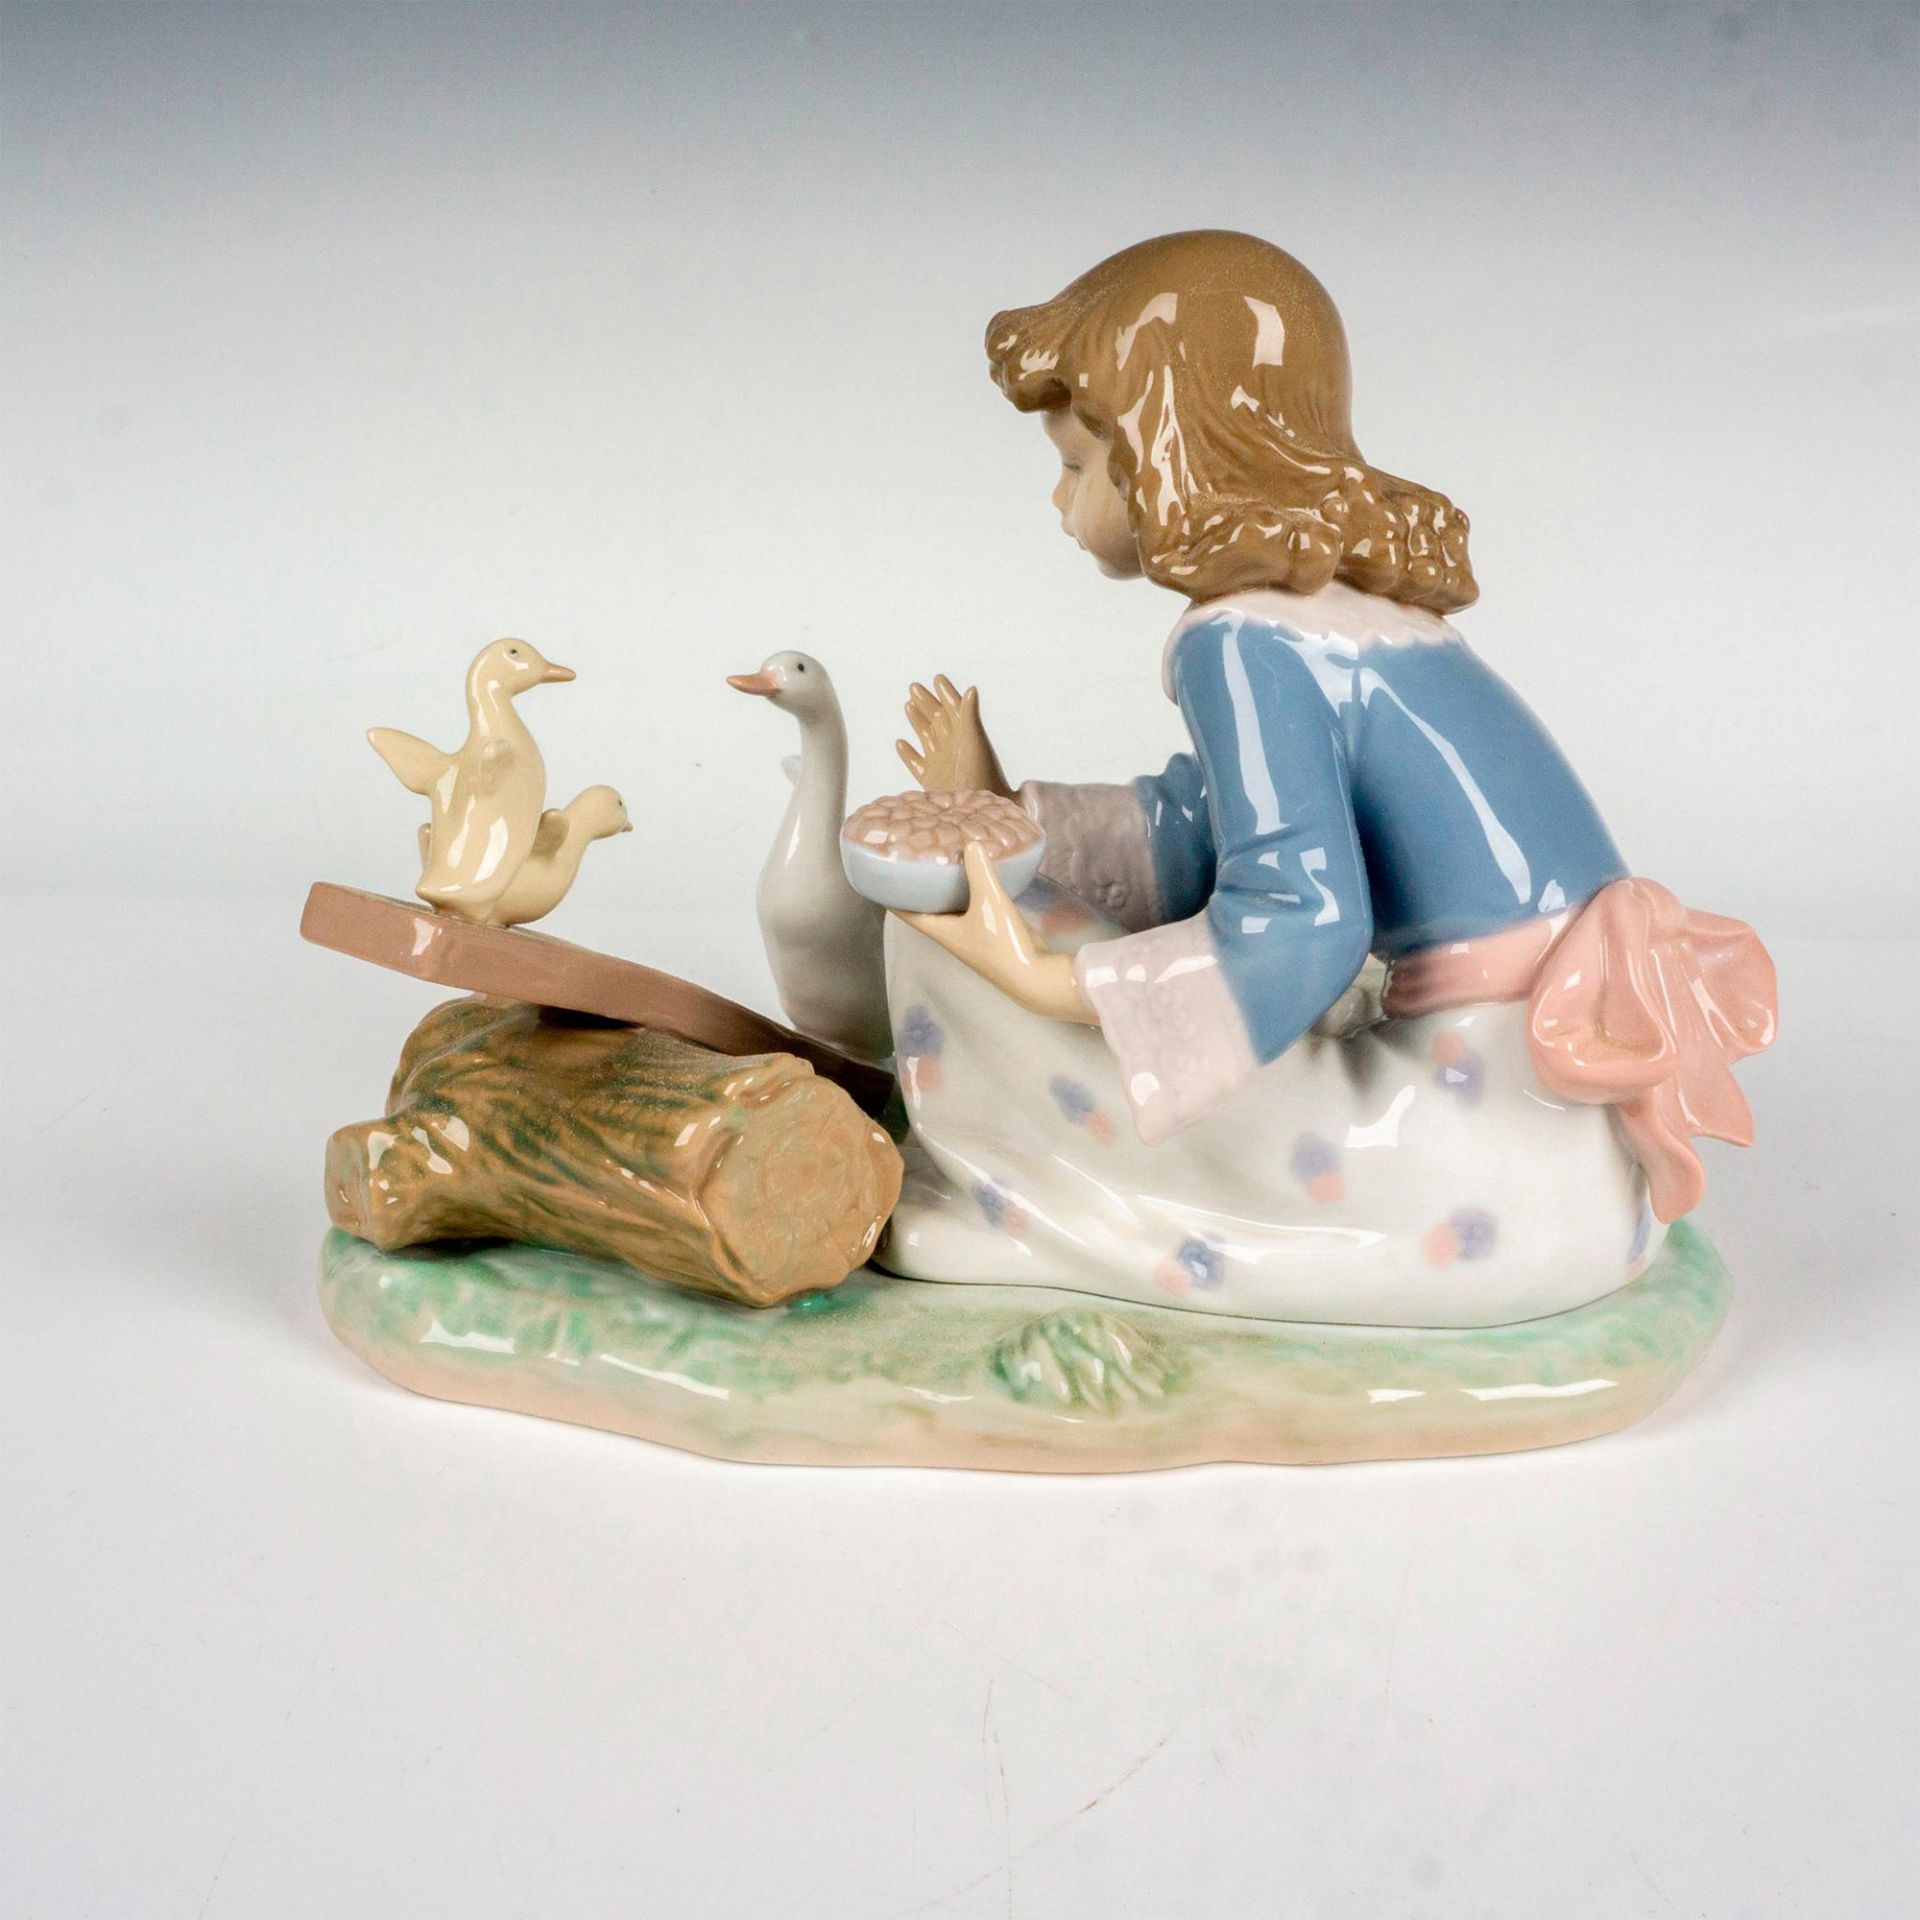 Barnyard Seesaw 1006025 - Lladro Porcelain Figurine - Image 2 of 3